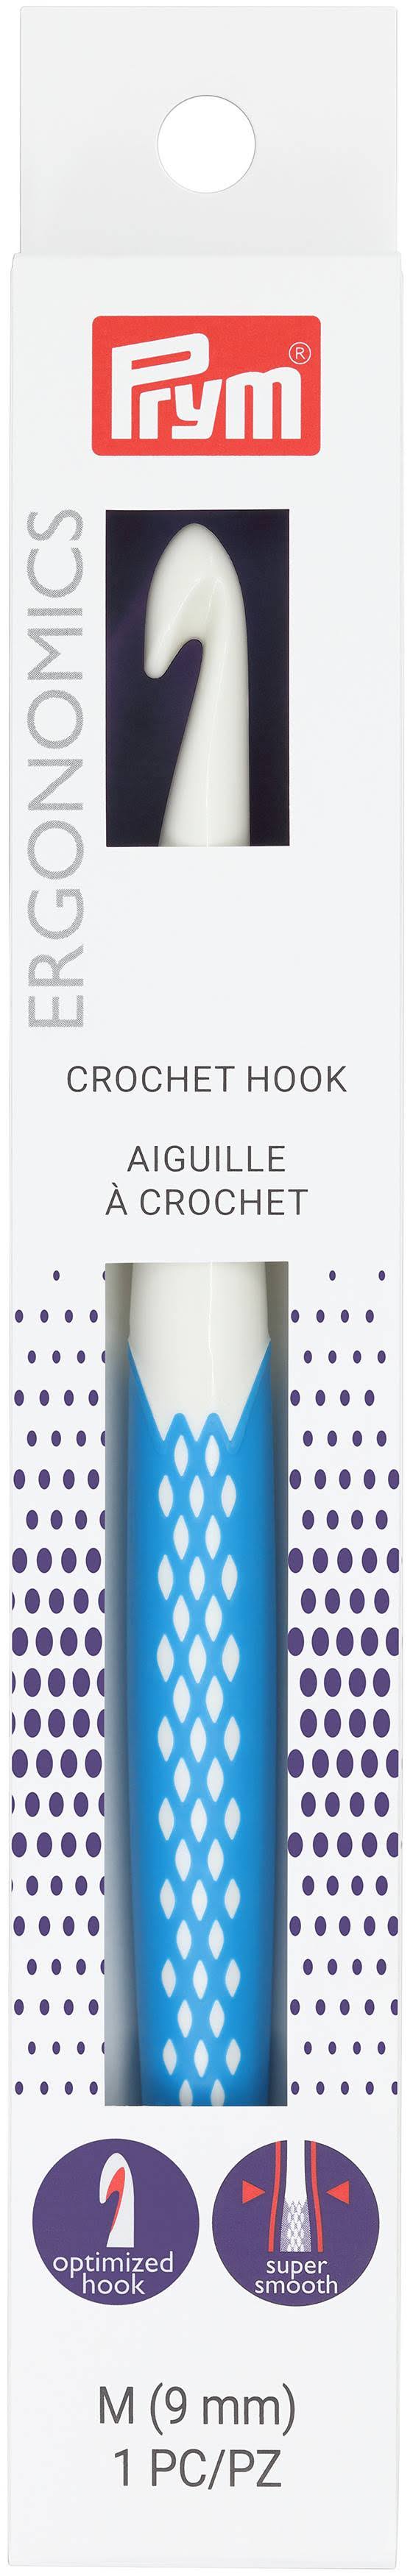 Prym Crochet Hook M, Size M13/9mm